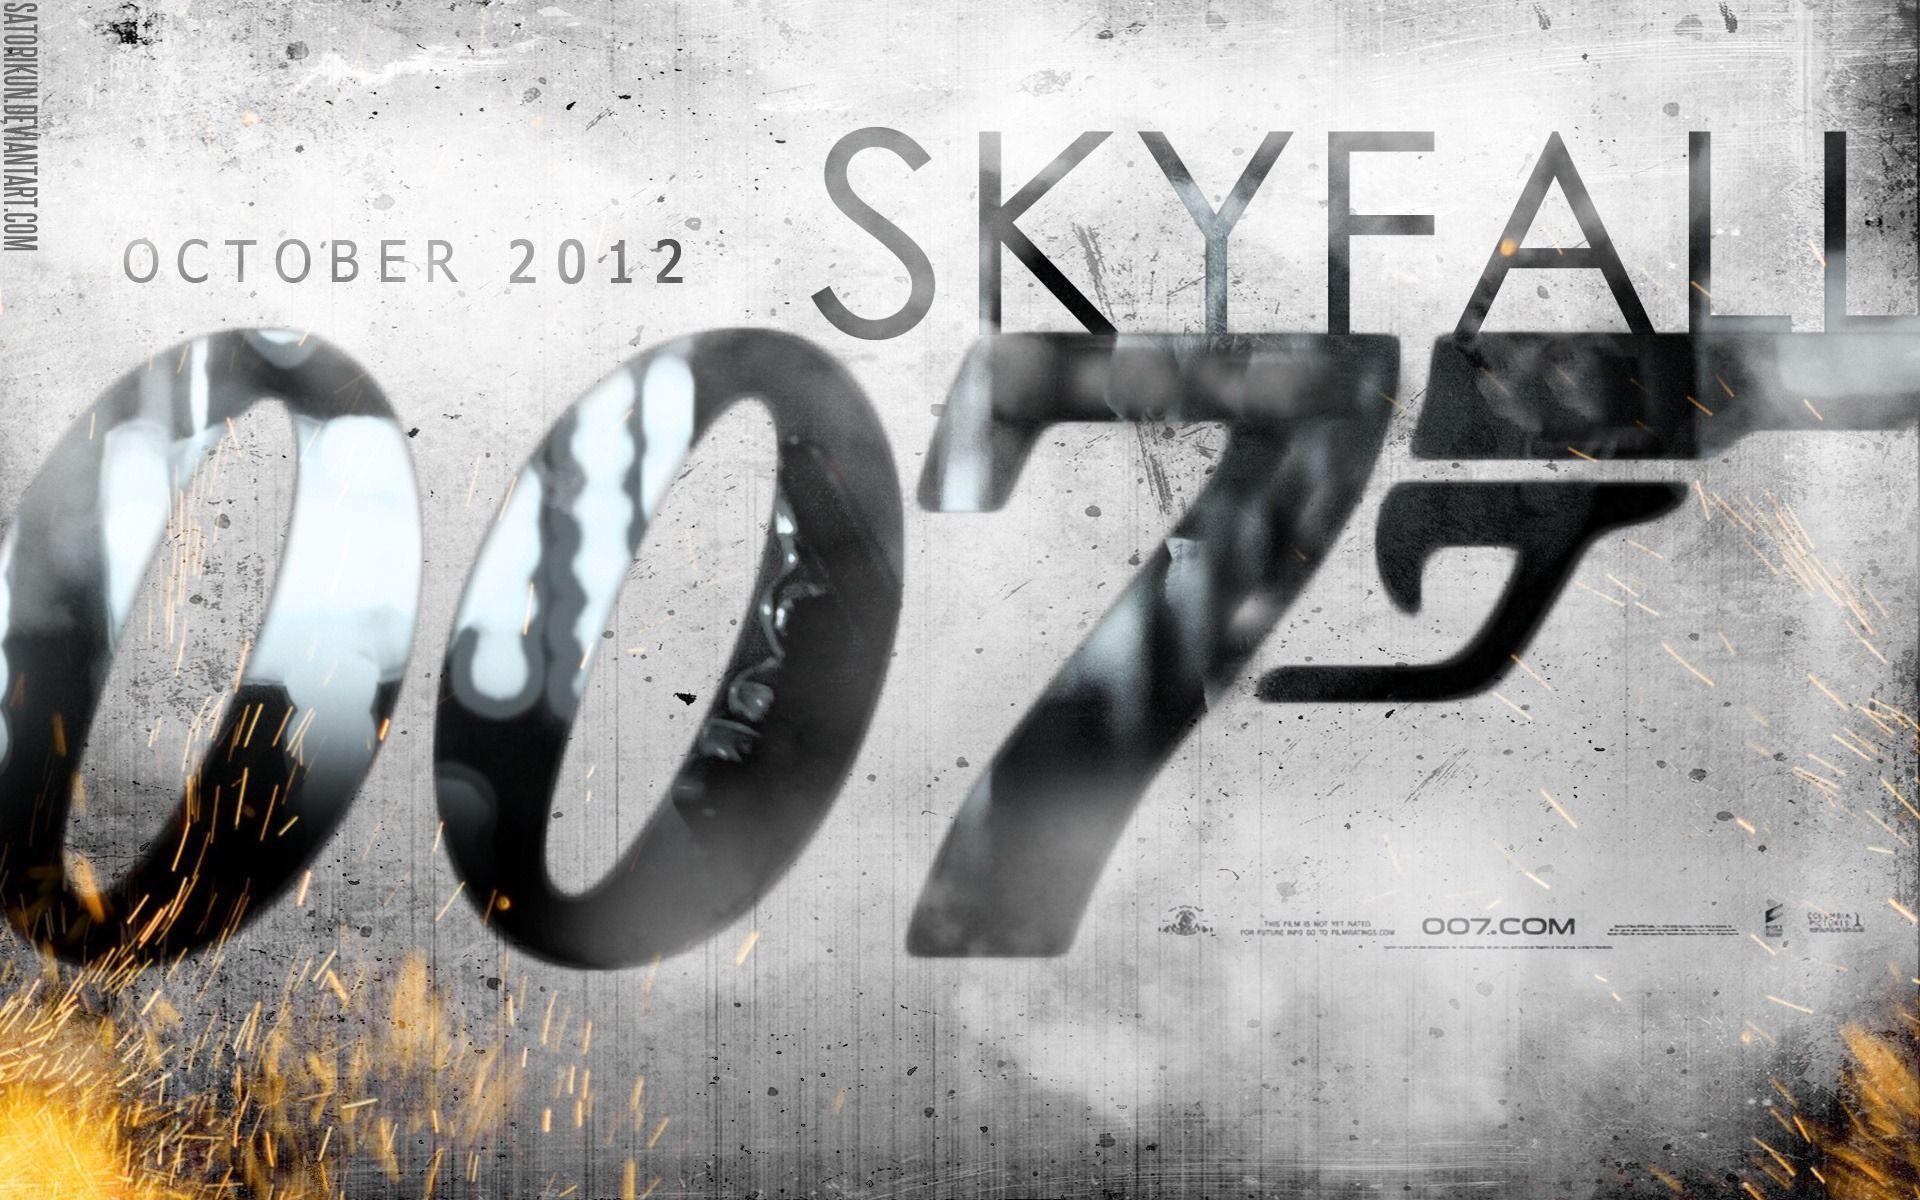 James Bond Skyfall in Movies